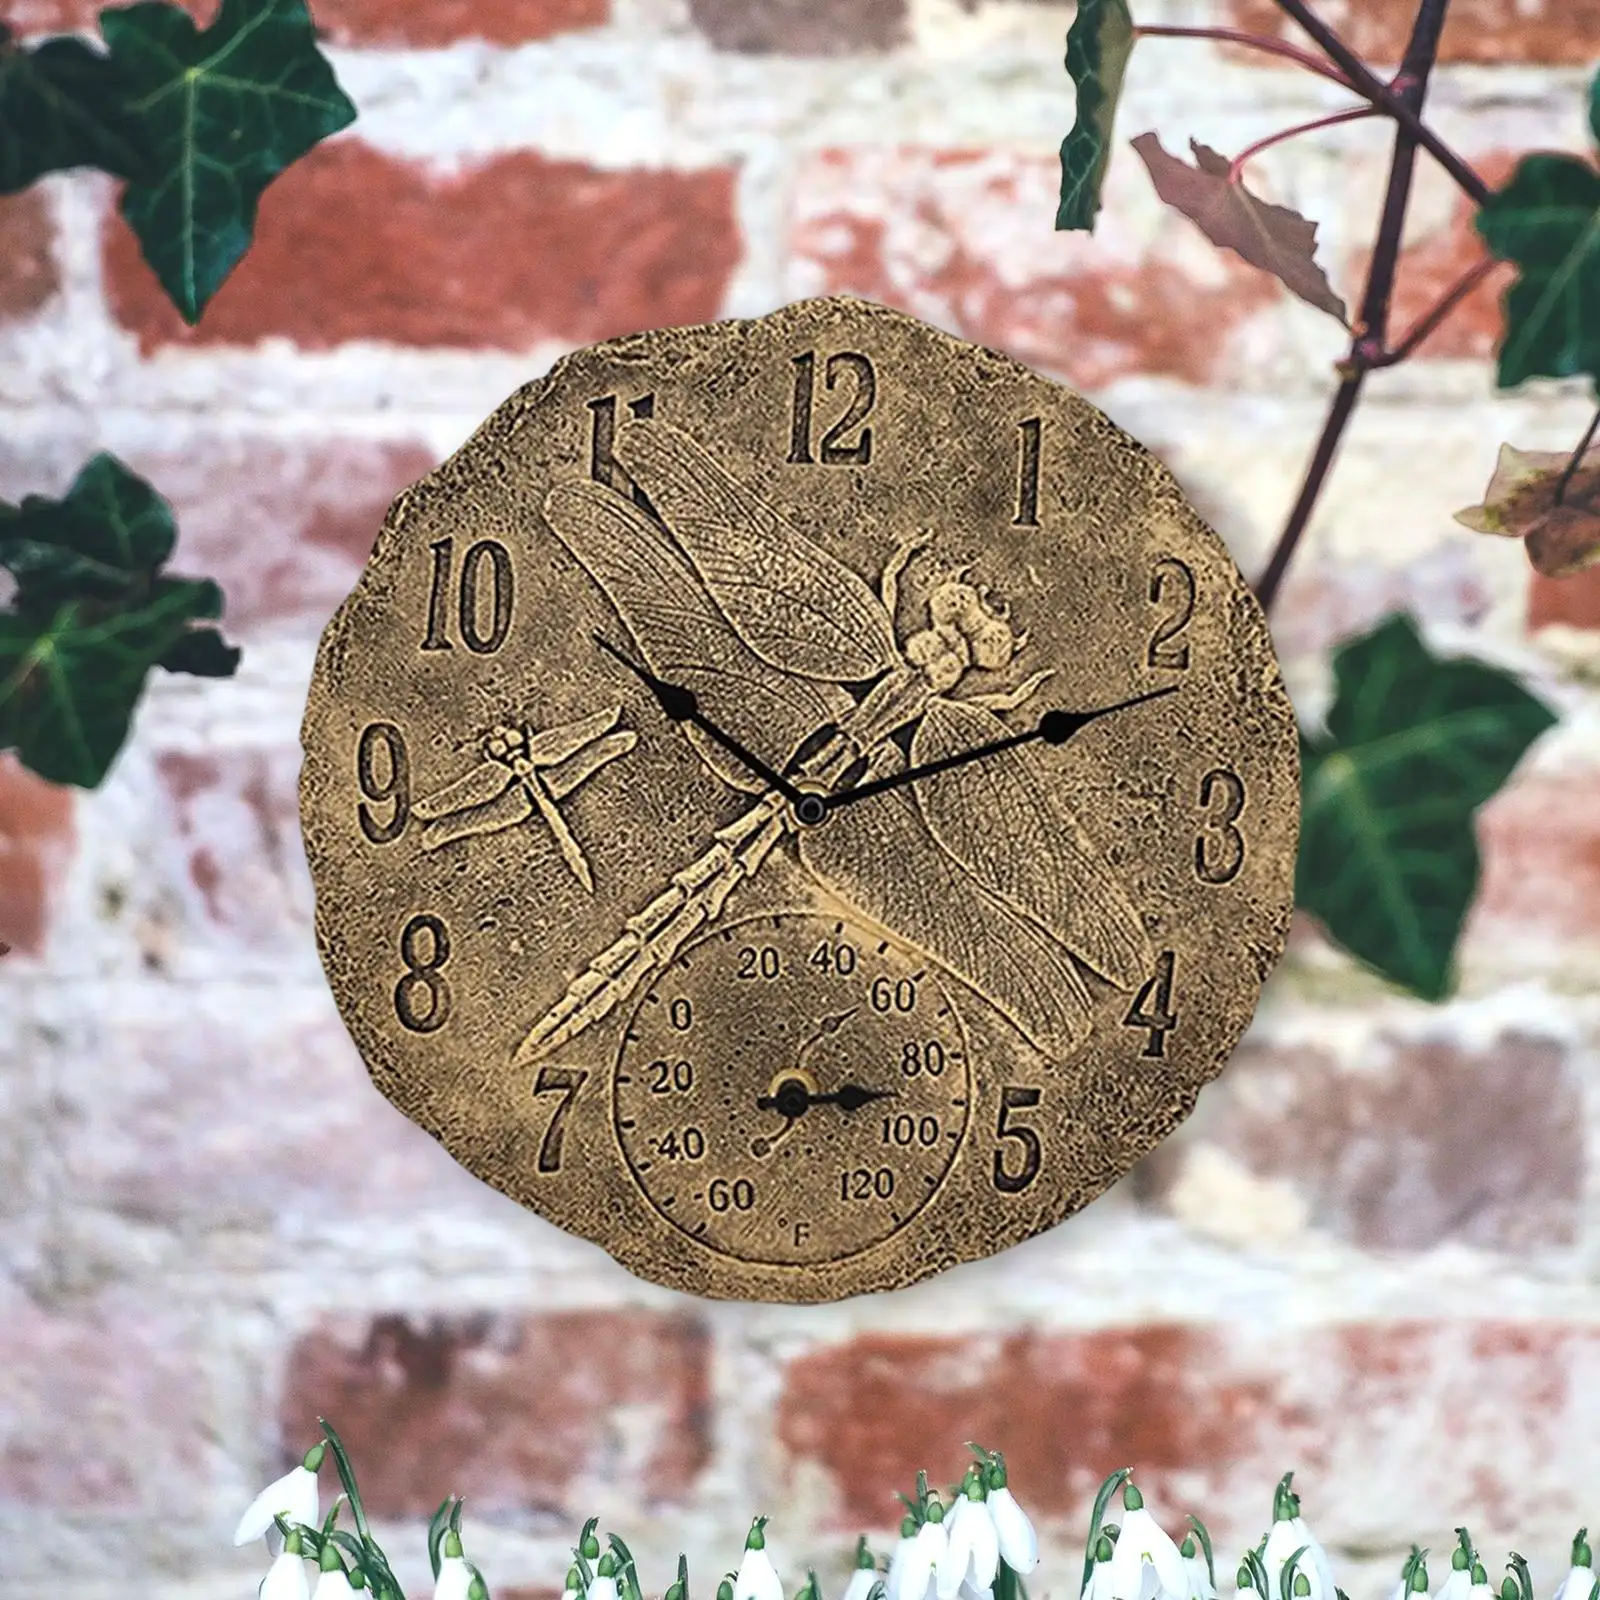 30.5cm Wall Clock Indoor Outdoor Waterproof with Temperature Display Quartz Round Clocks for Kitchen Yard Backyard Porch